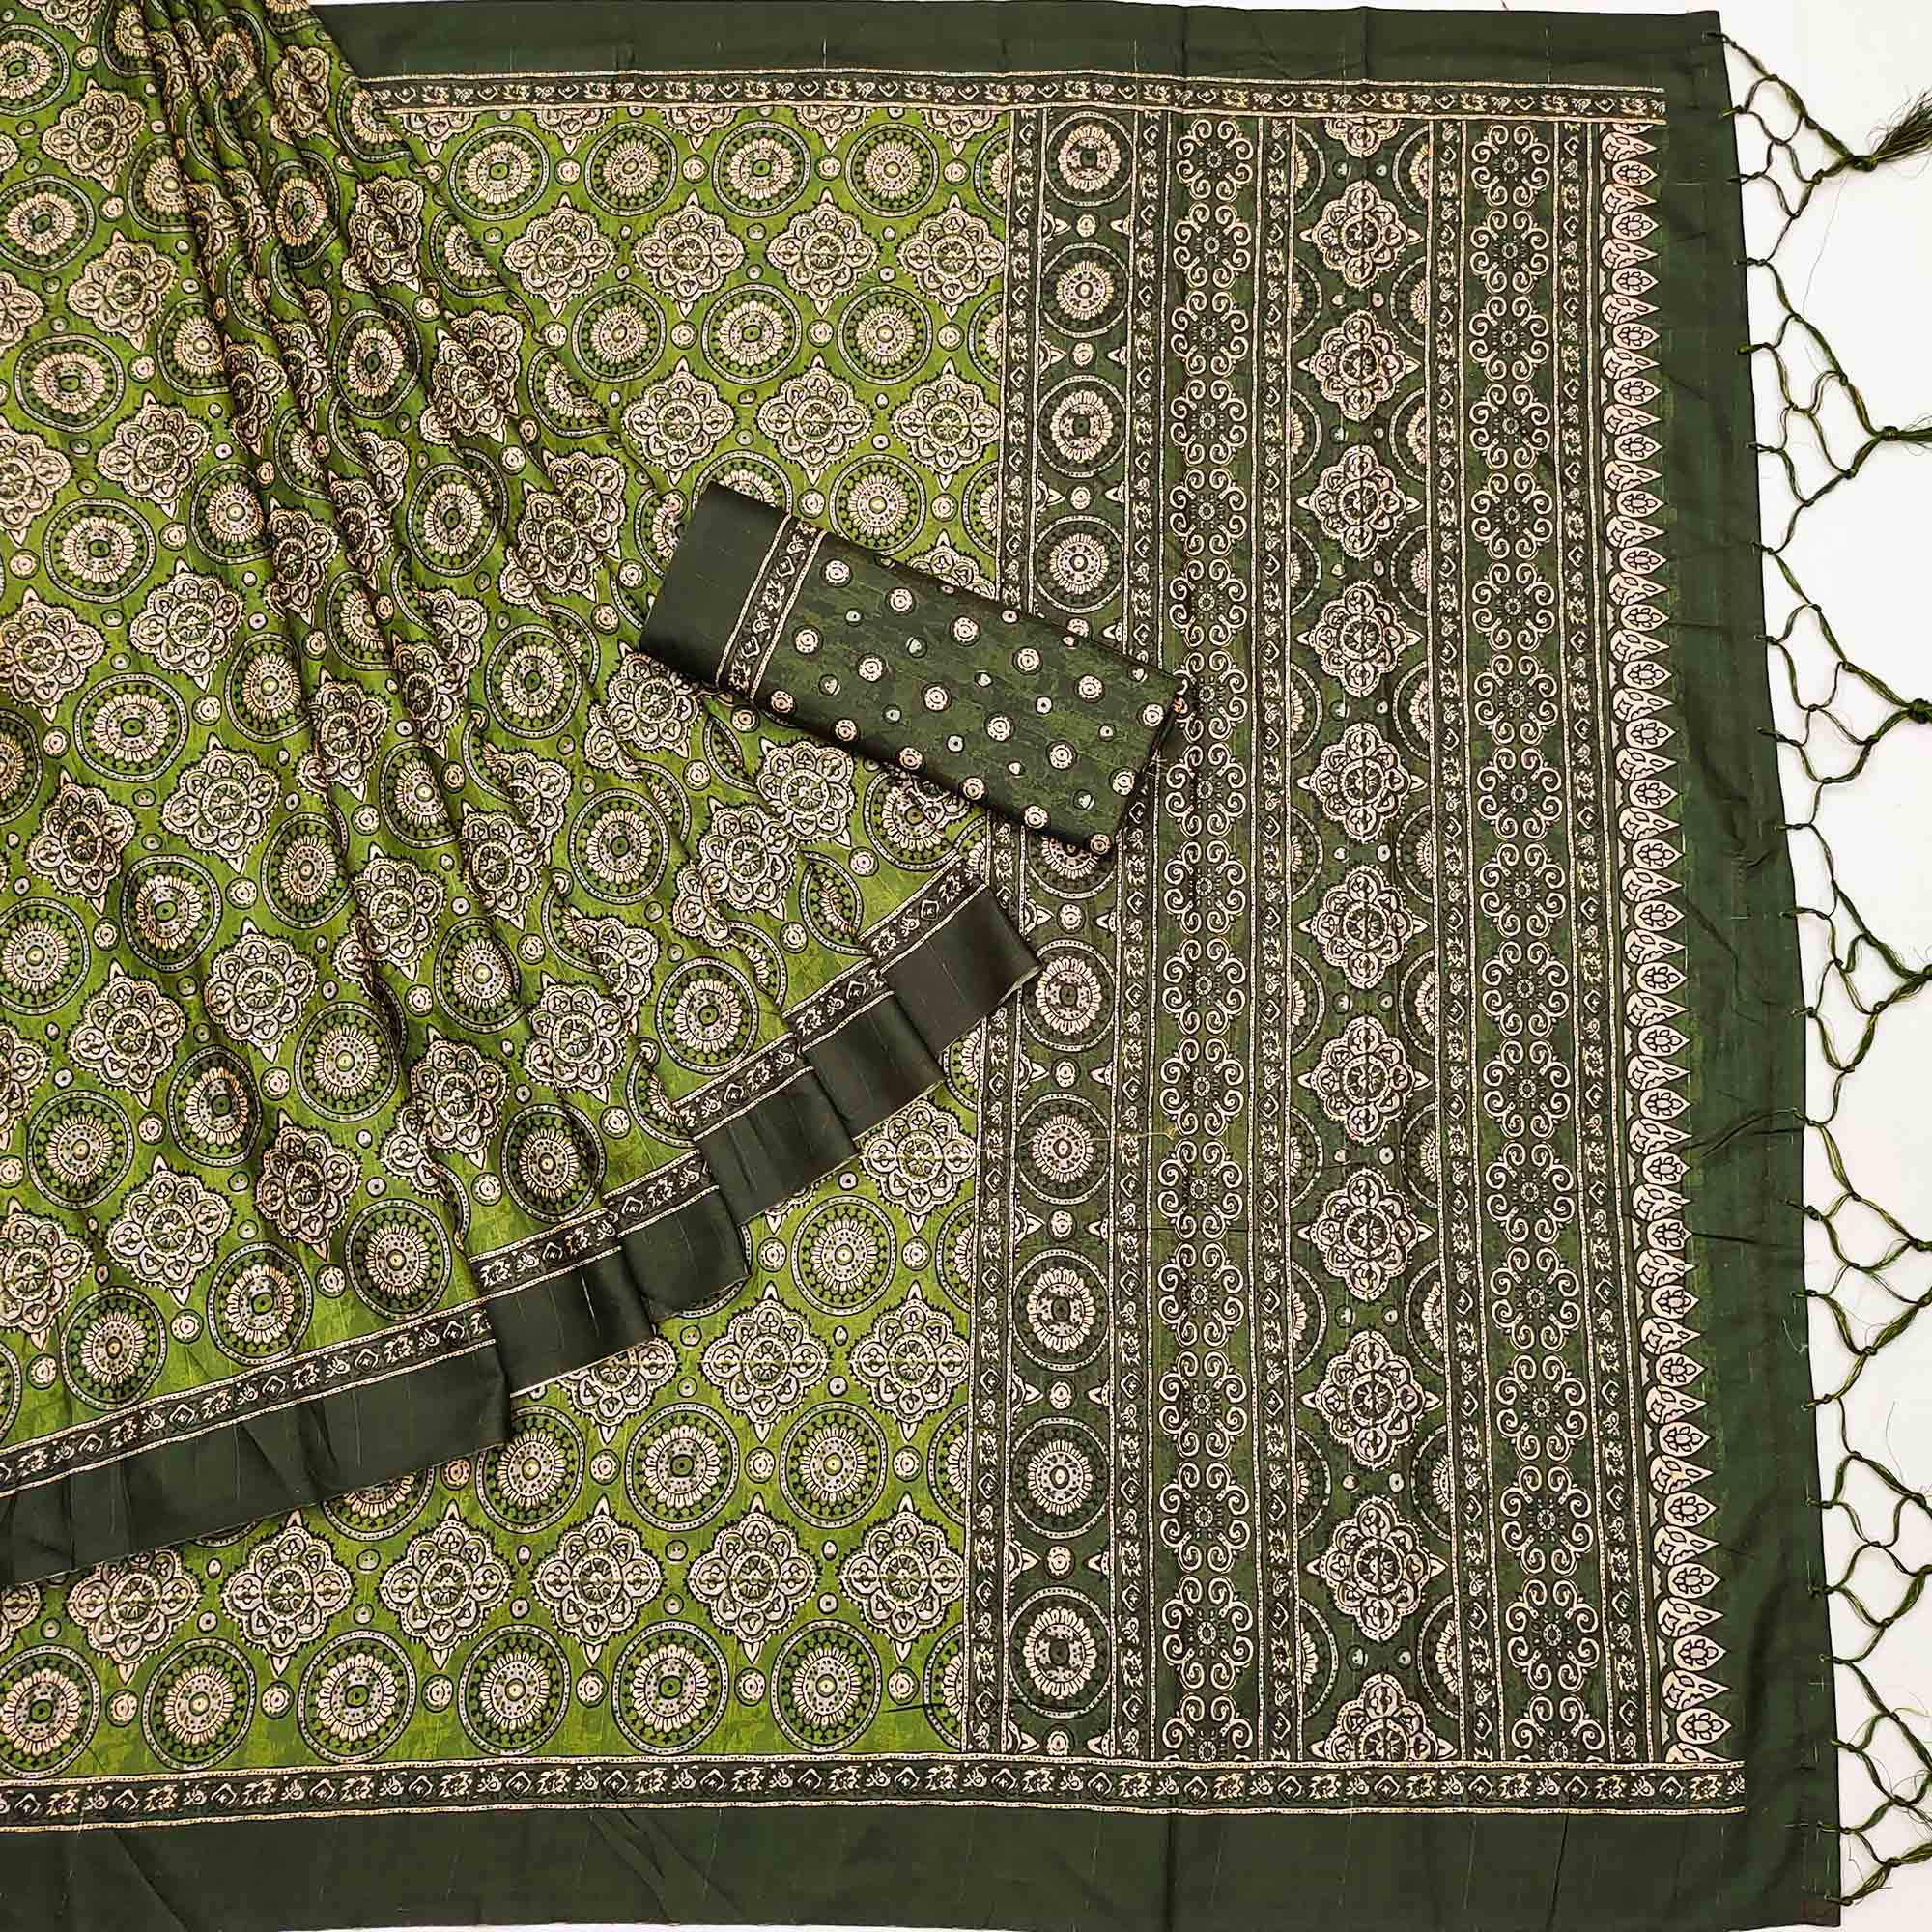 Green Floral Digital Printed Tussar Silk Saree With Tassels